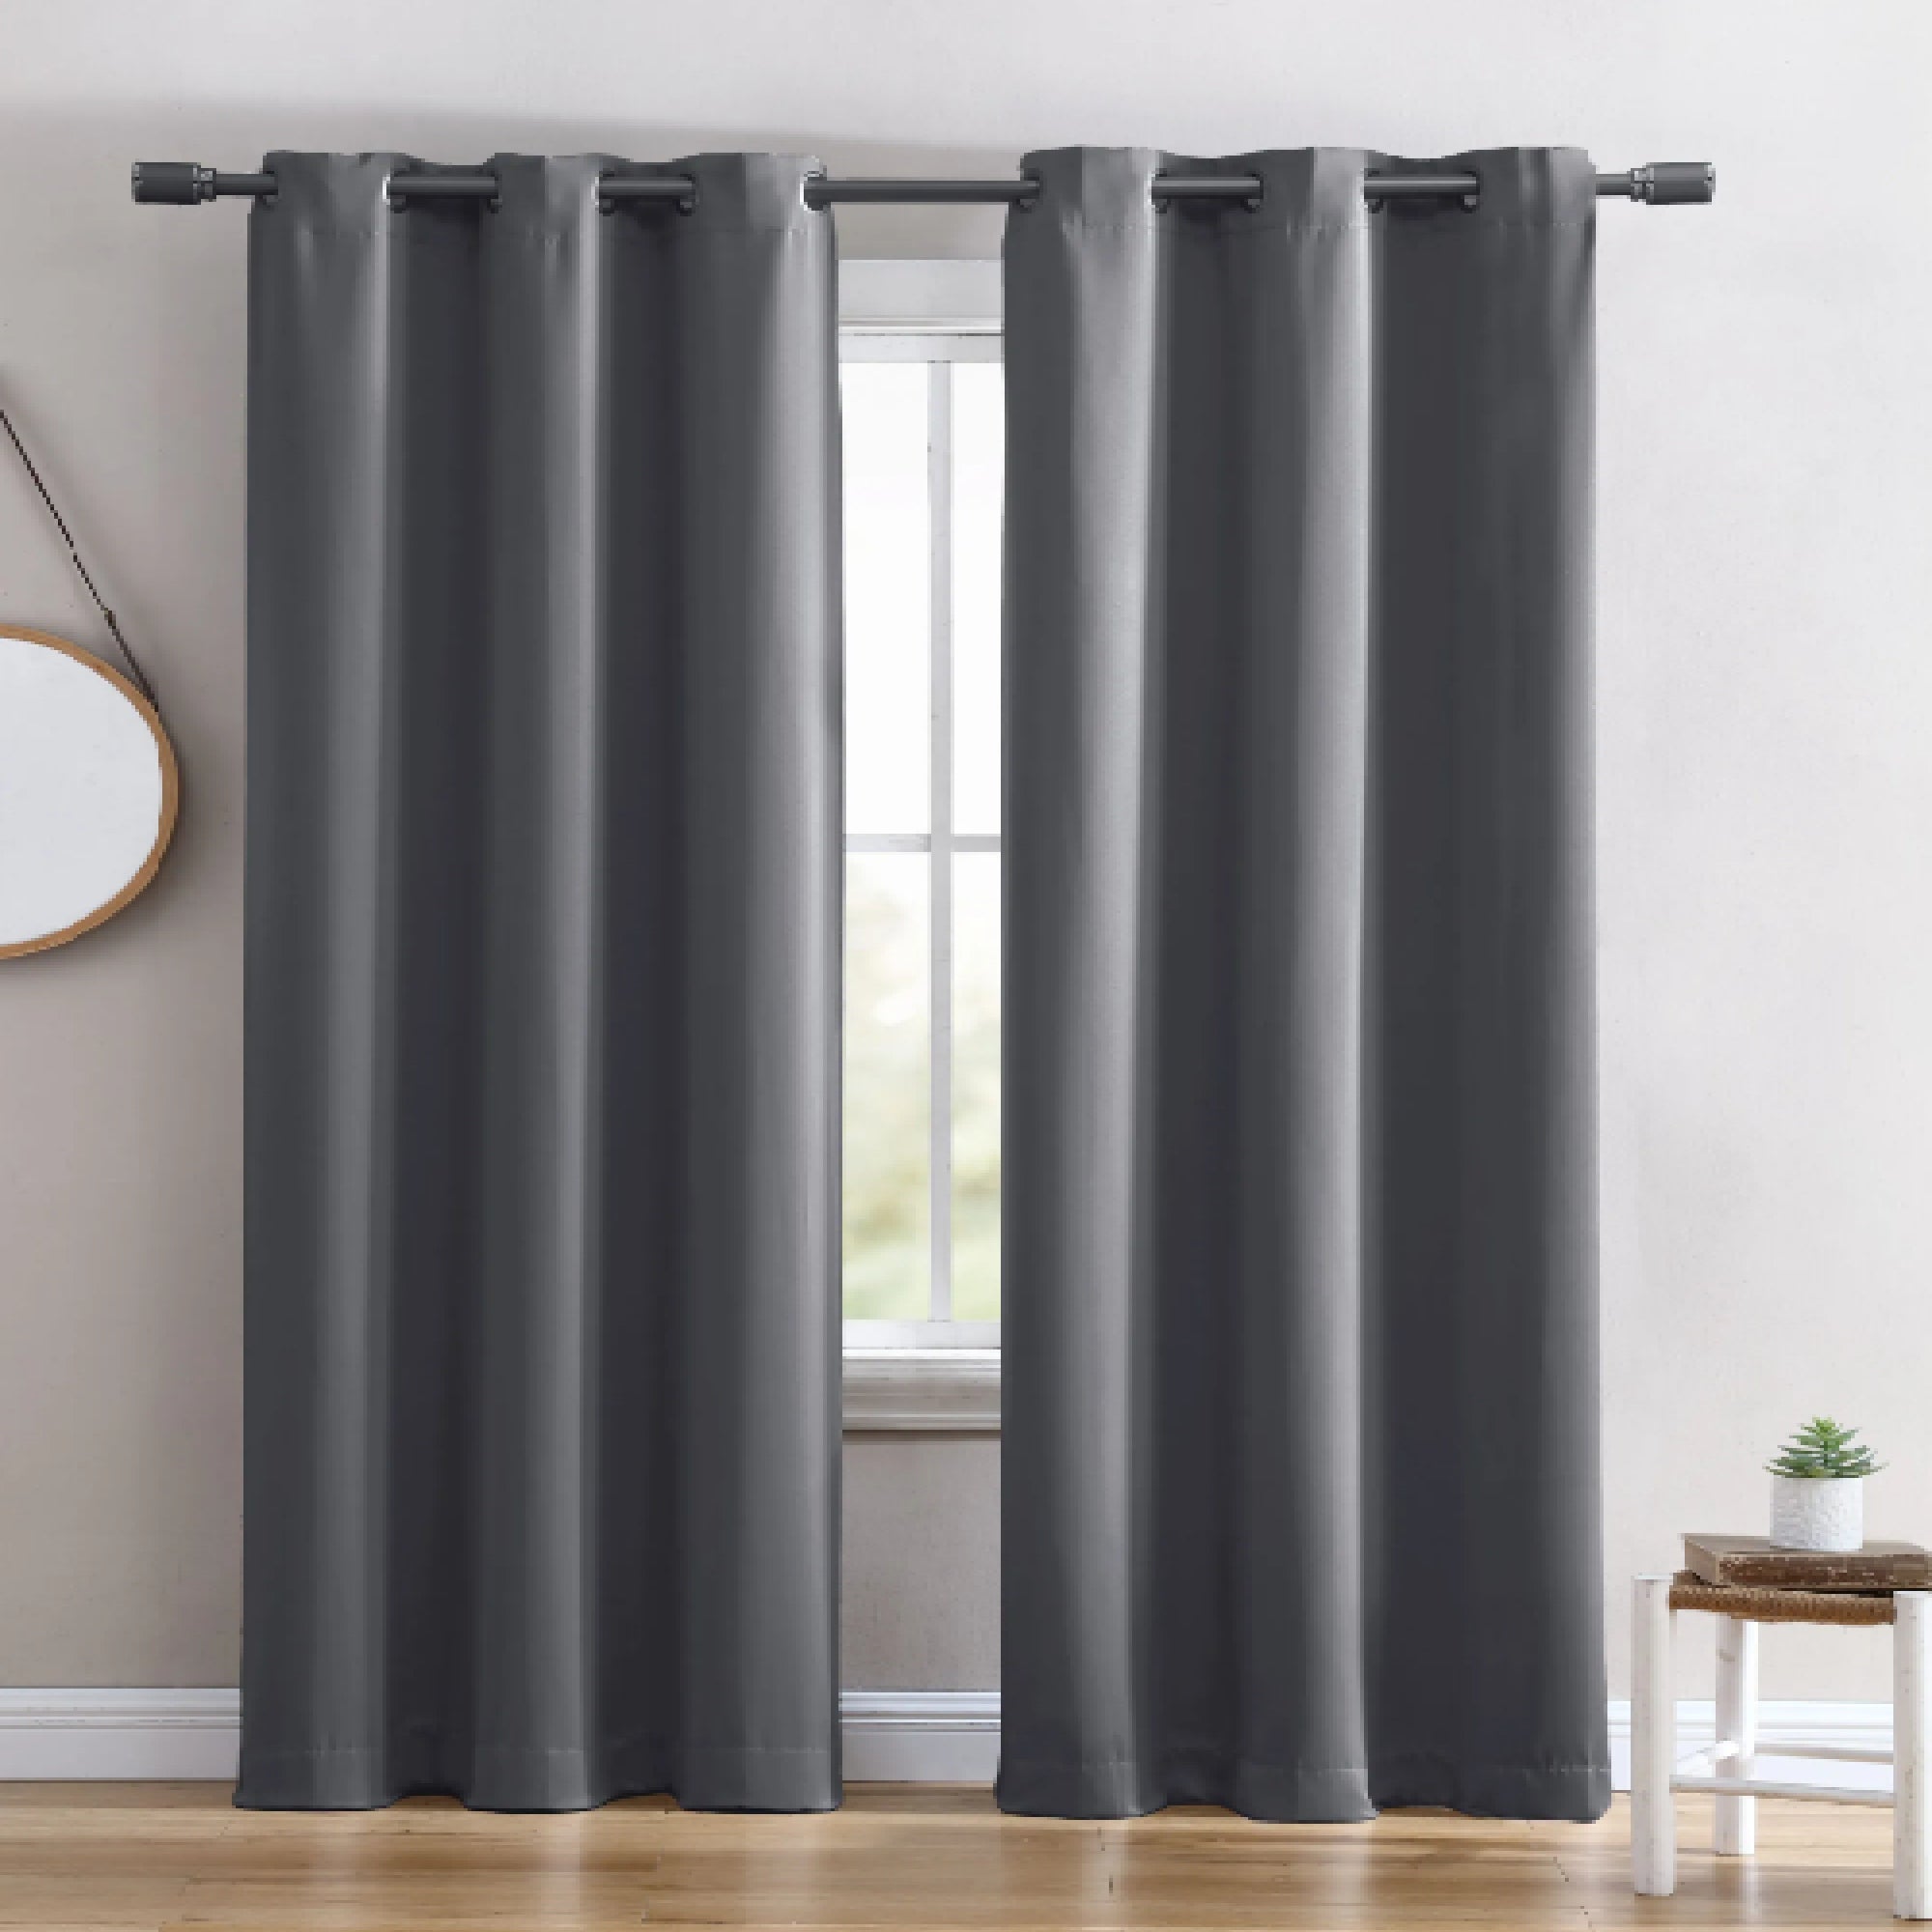 Ring Top Solid Blackout Thermal Grommet Single Curtain Panel Dark grey